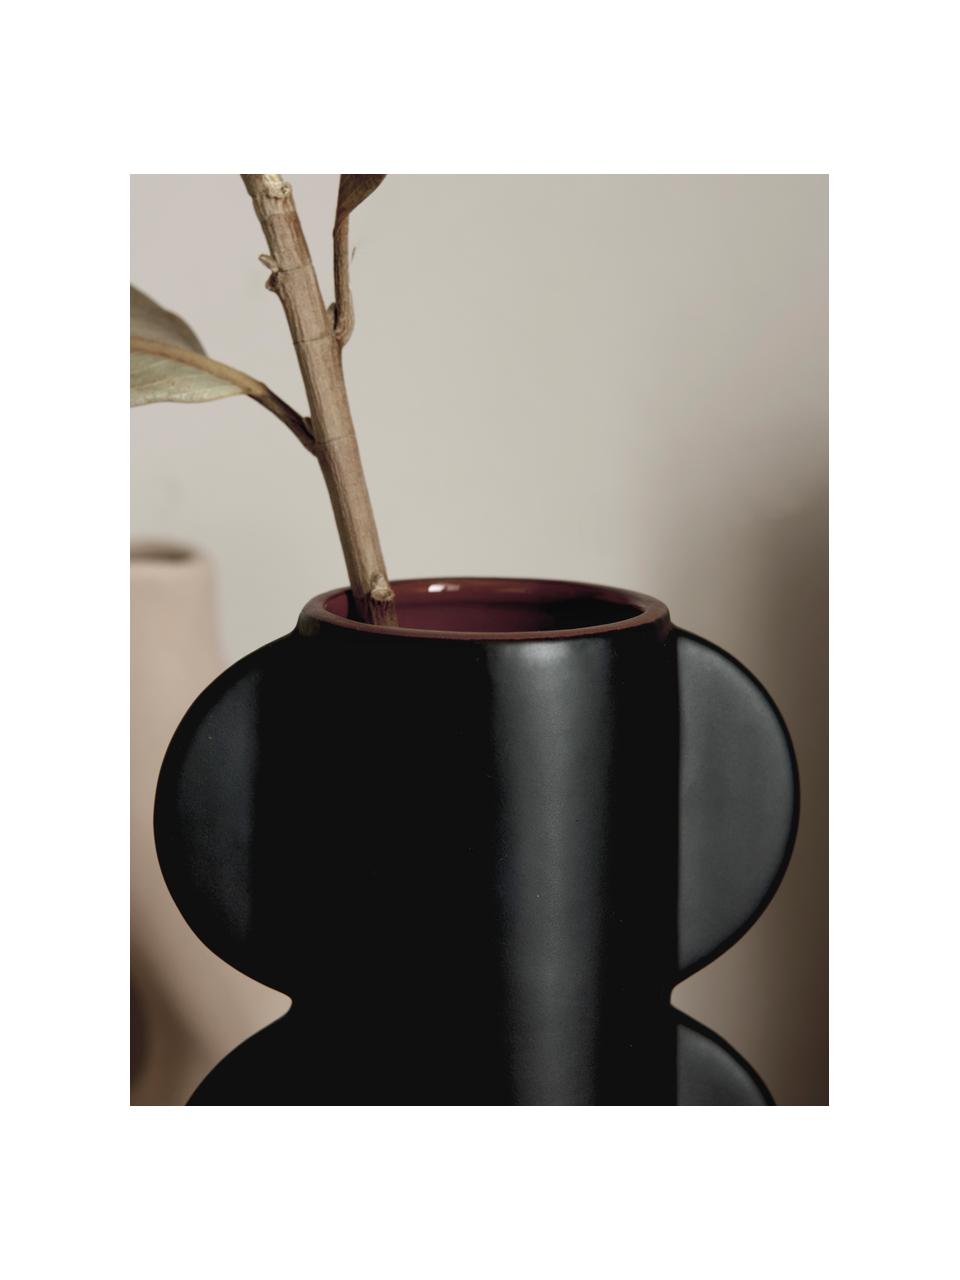 Moderní keramická váza Elephant Ears, Keramika, Černá, Ø 12 cm, V 22 cm